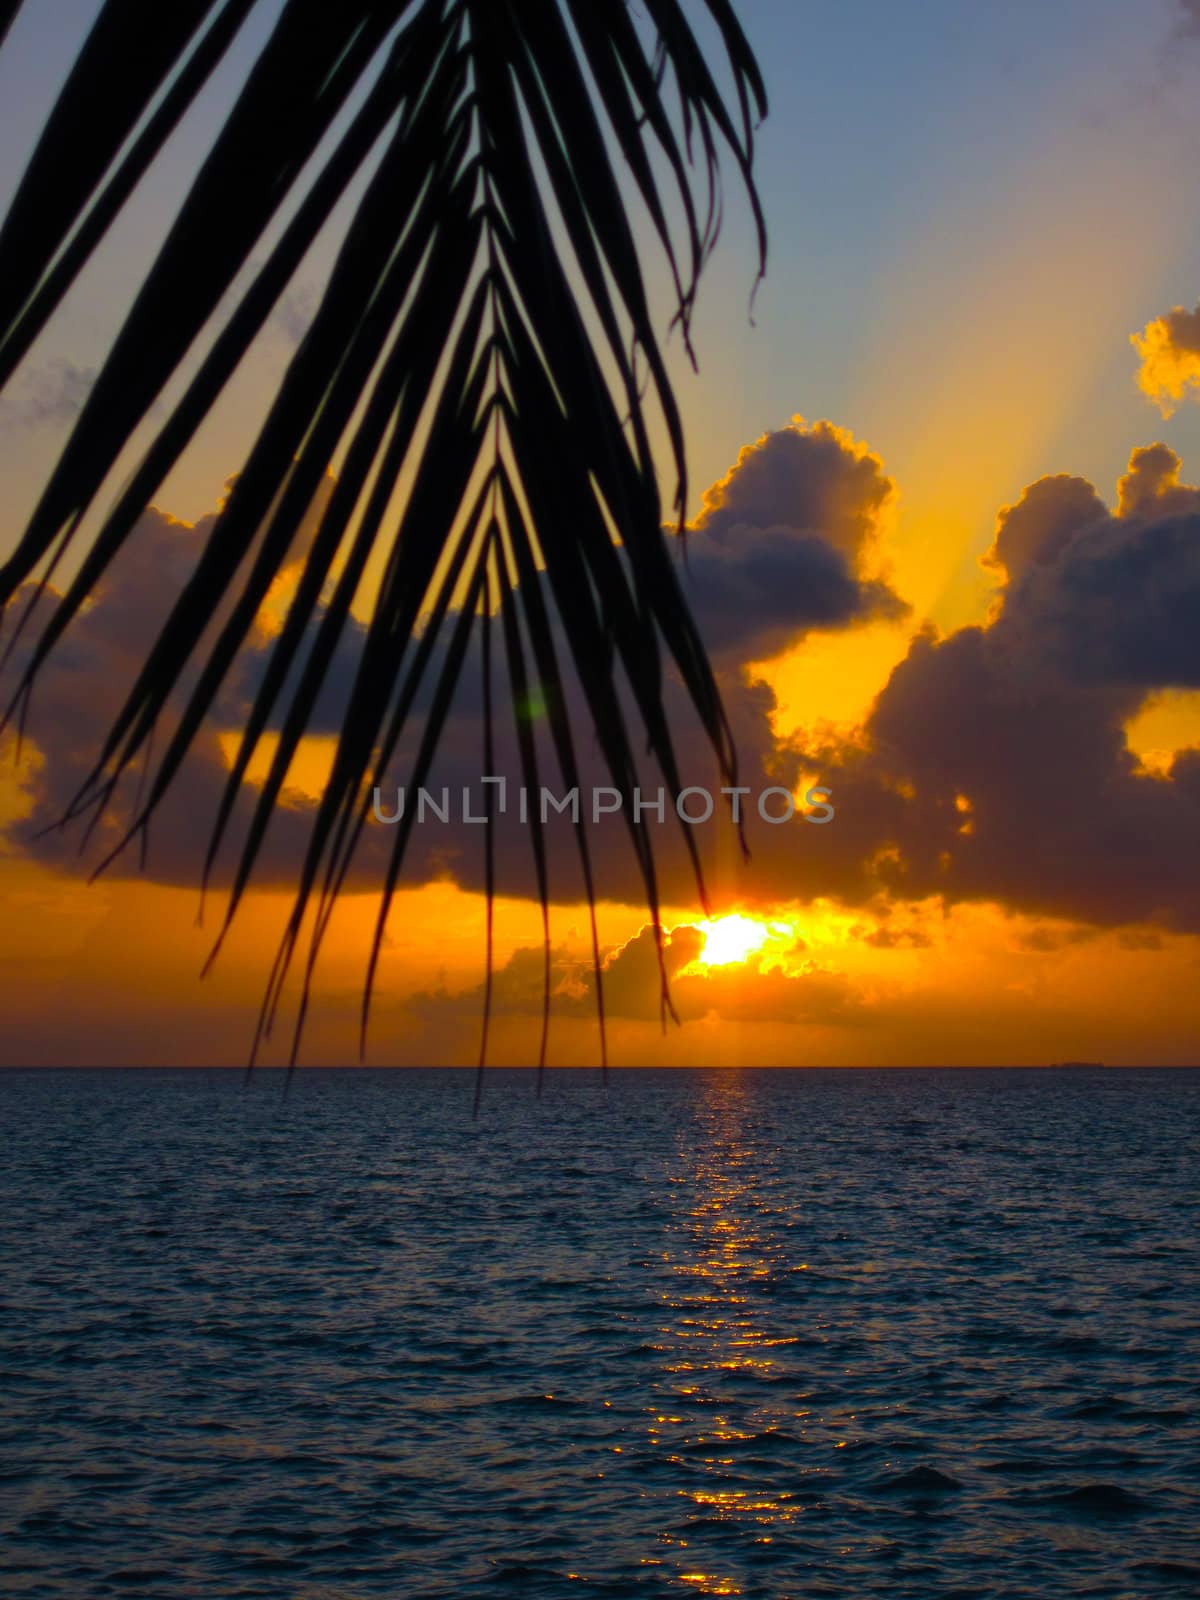 Maldivian Sunset by anobis